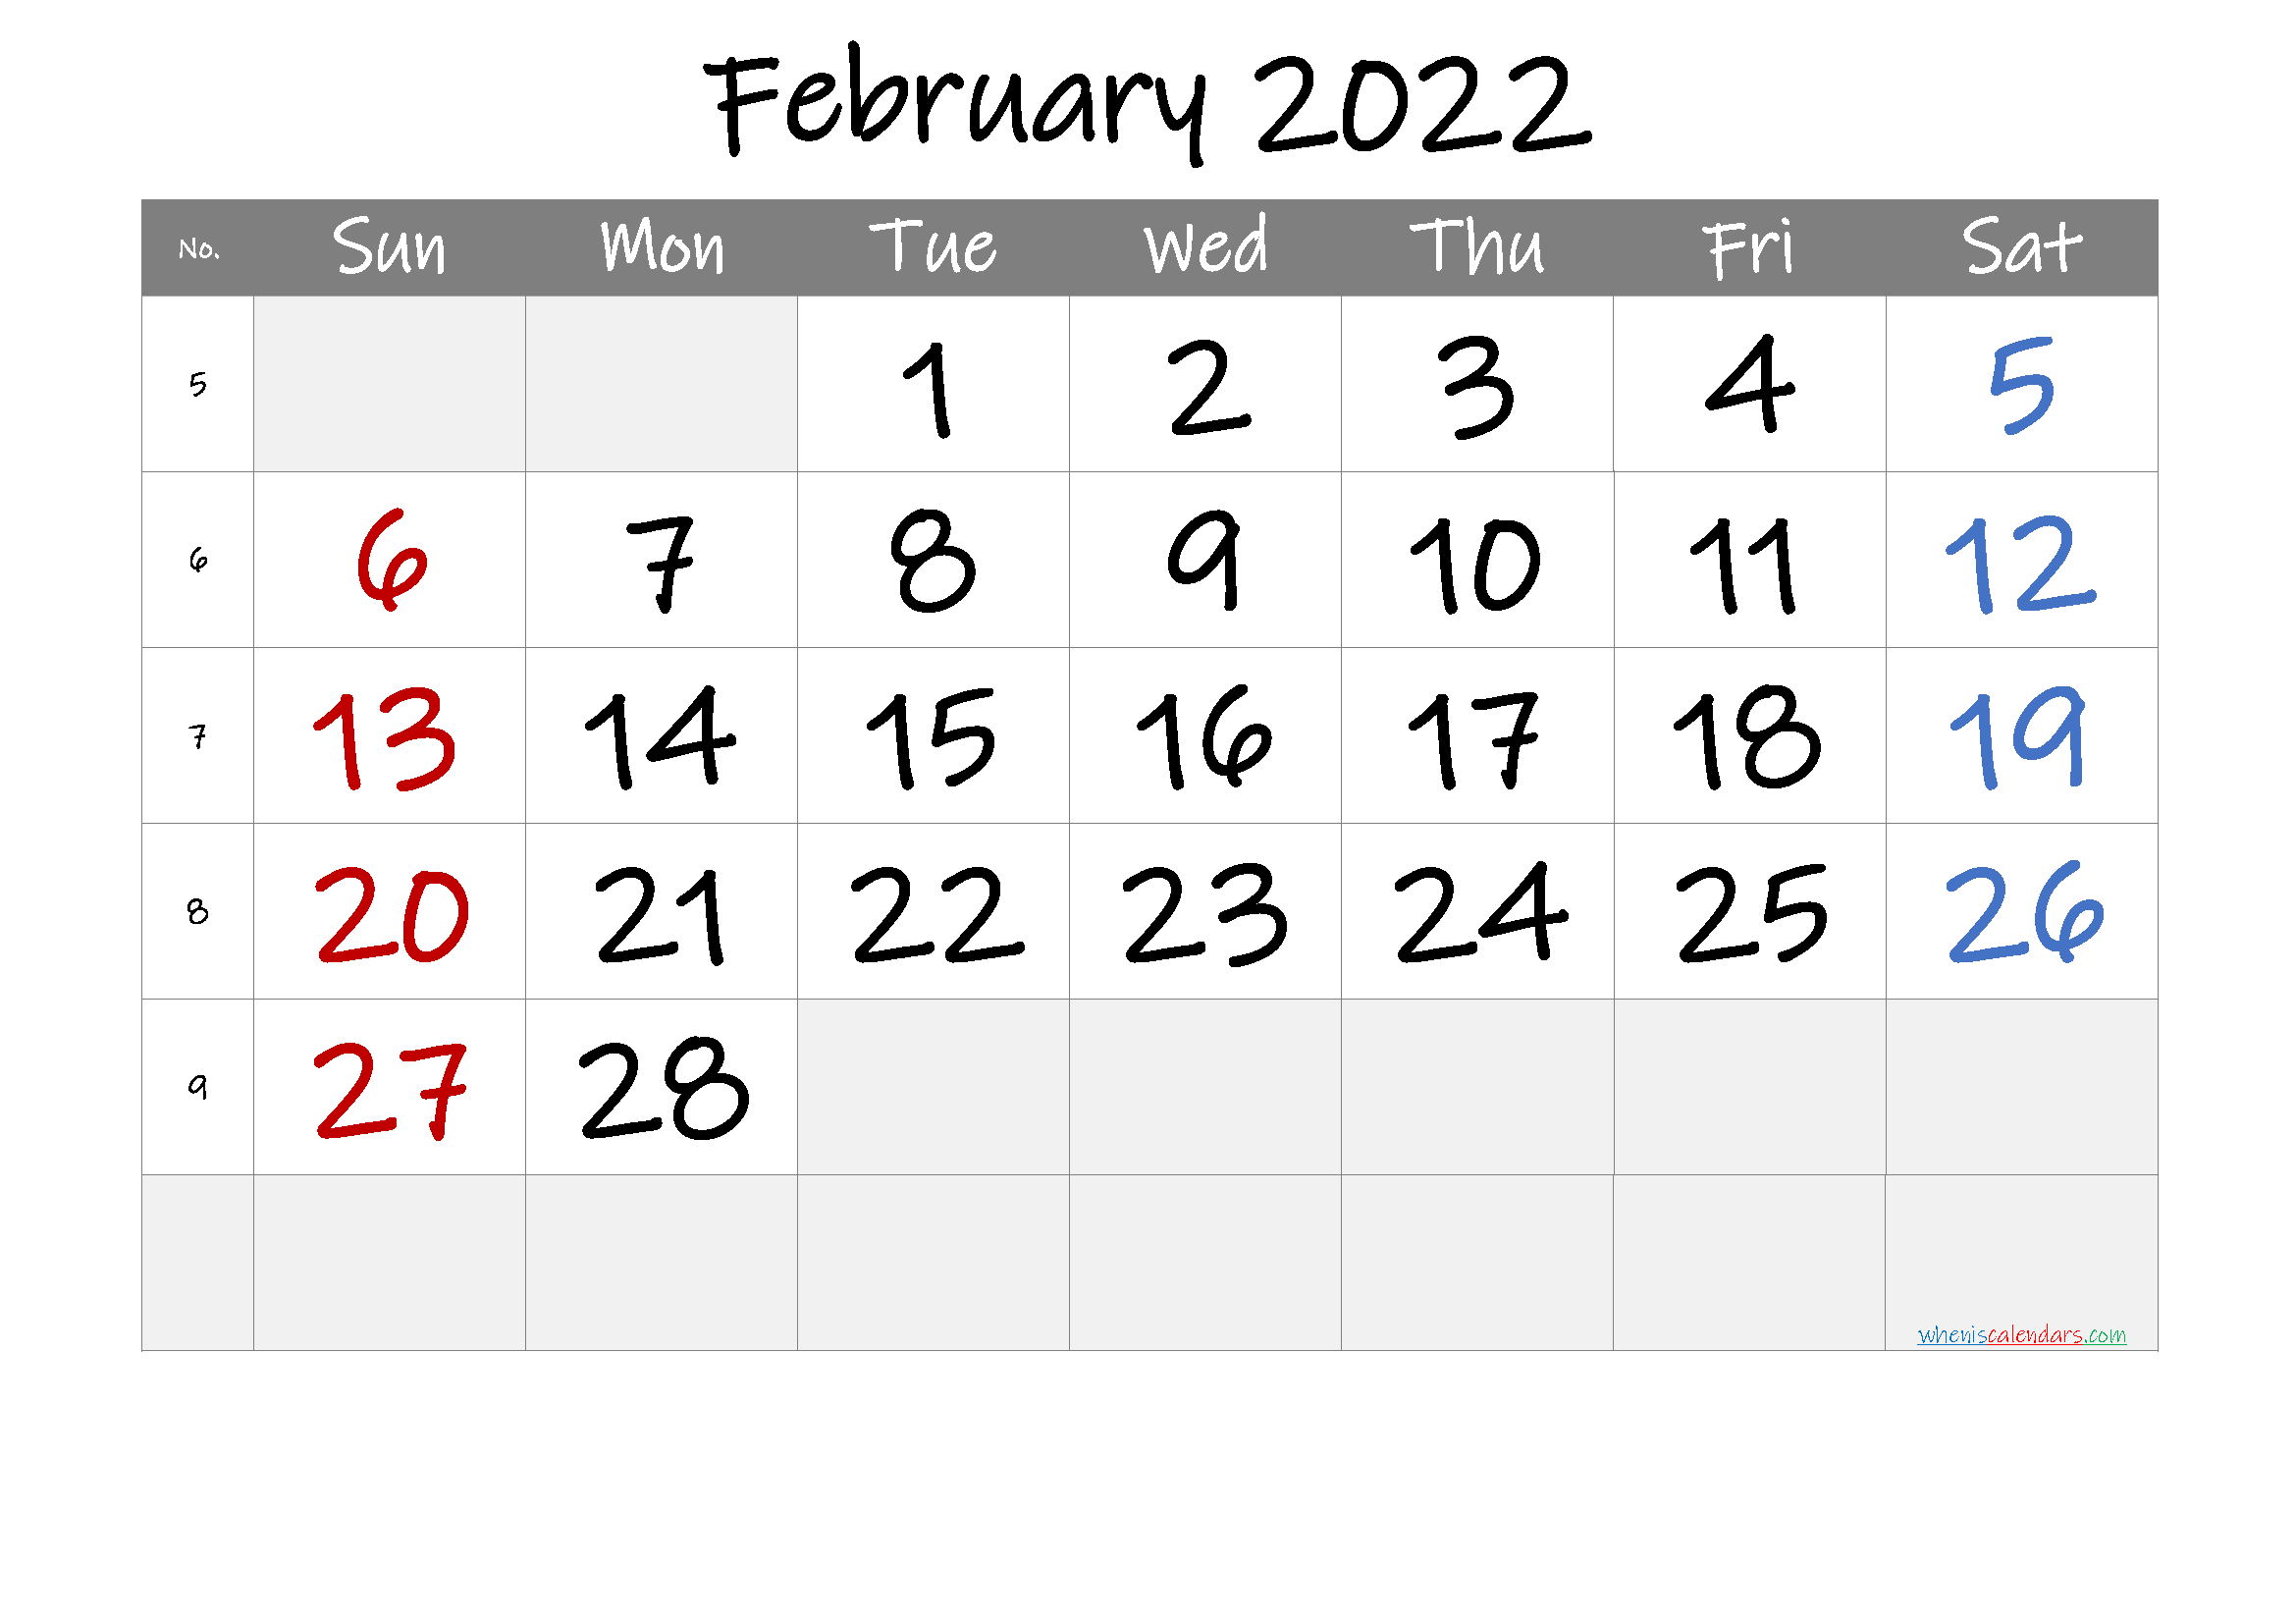 February 2022 Printable Calendar - 6 Templates - Free ...